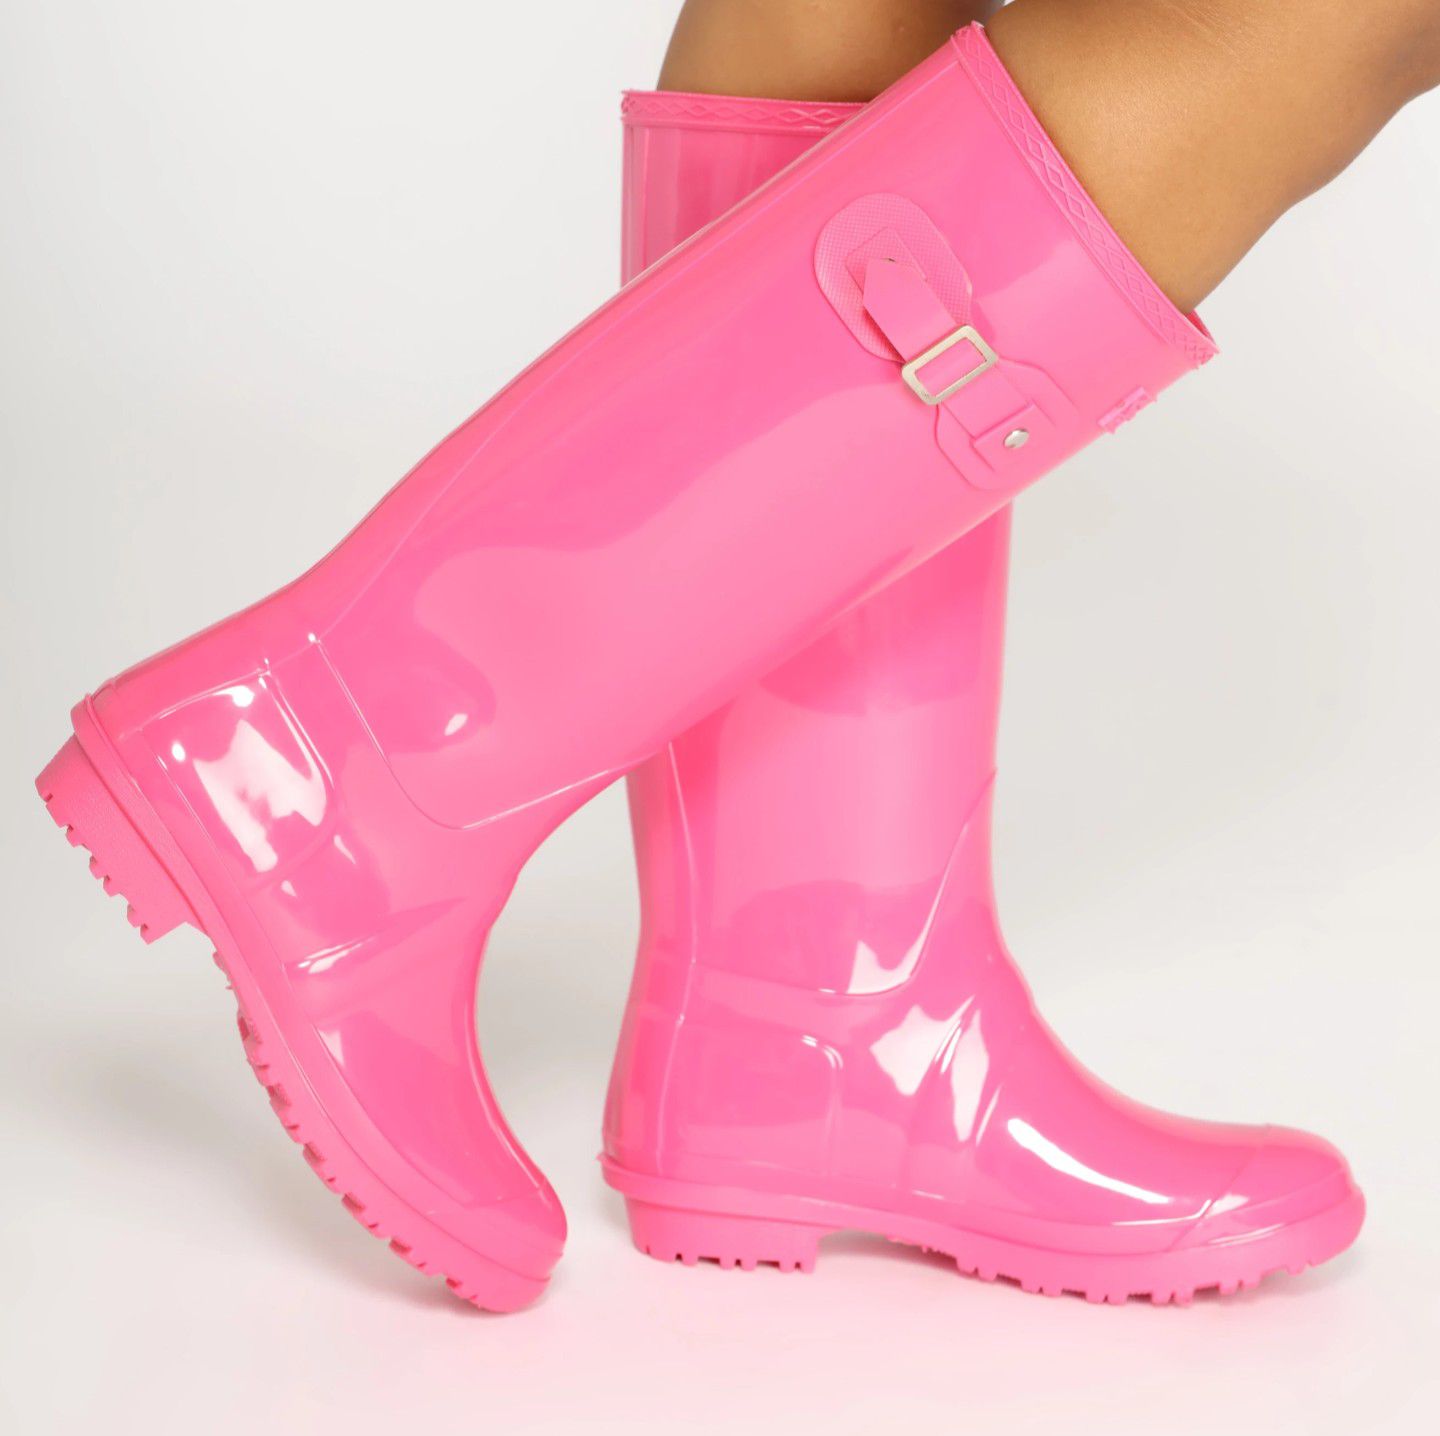 Pink rain boots brand new never worn in box sz9